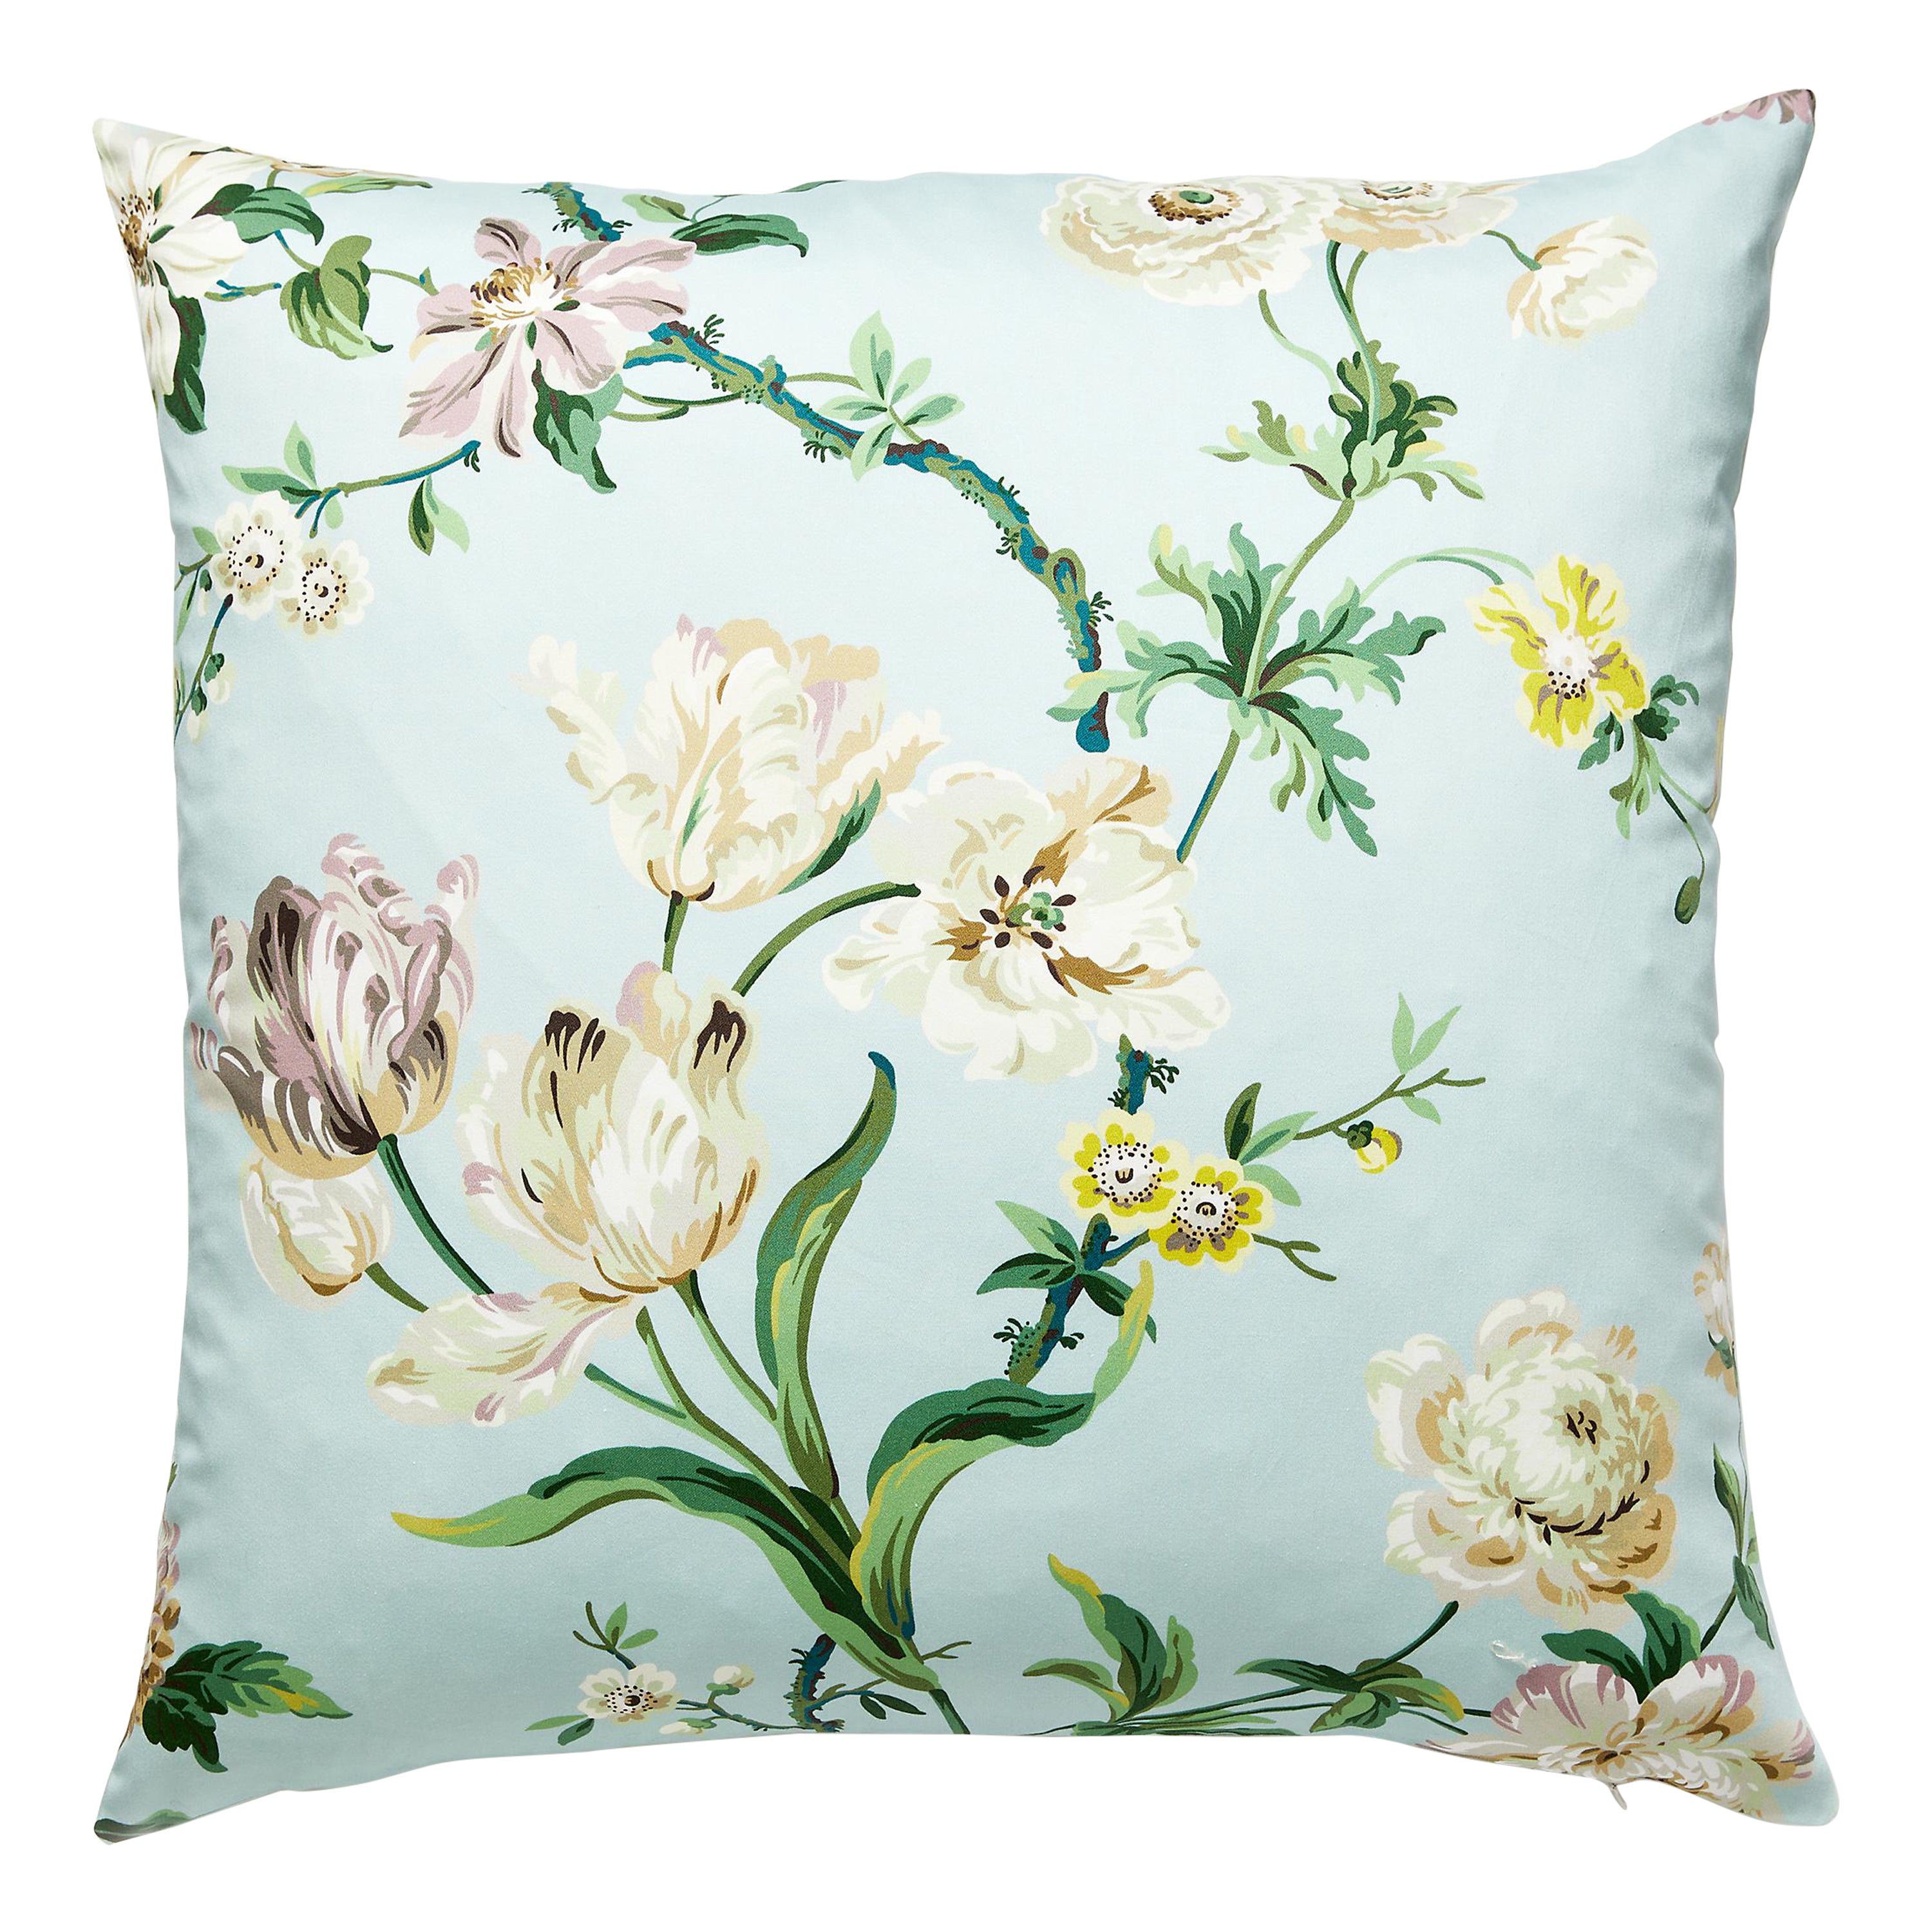 Botanical Garden Pillow For Sale